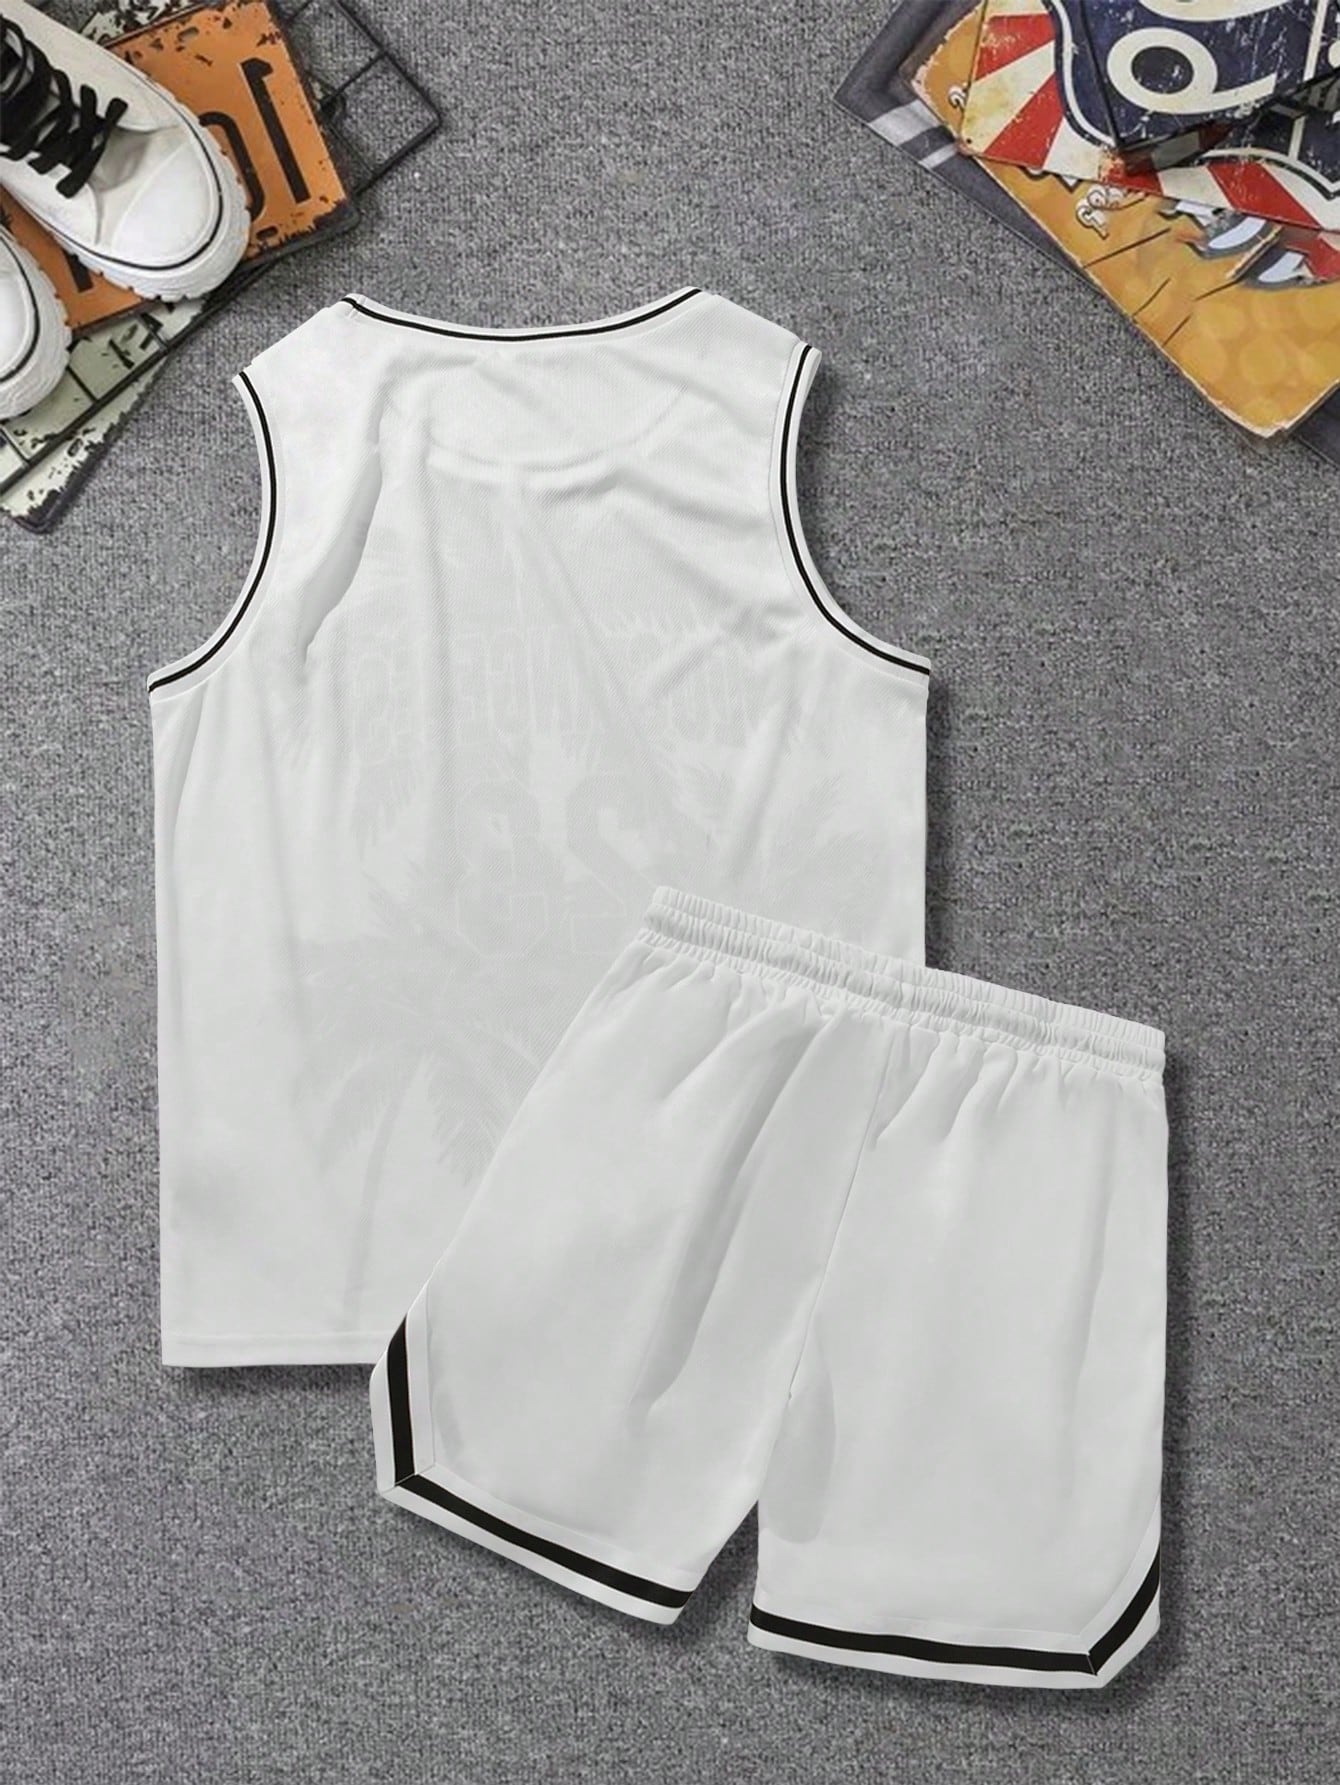 Manfinity RSRT Men'S Letter & Palm Tree Print Vest And Shorts Two Piece Set